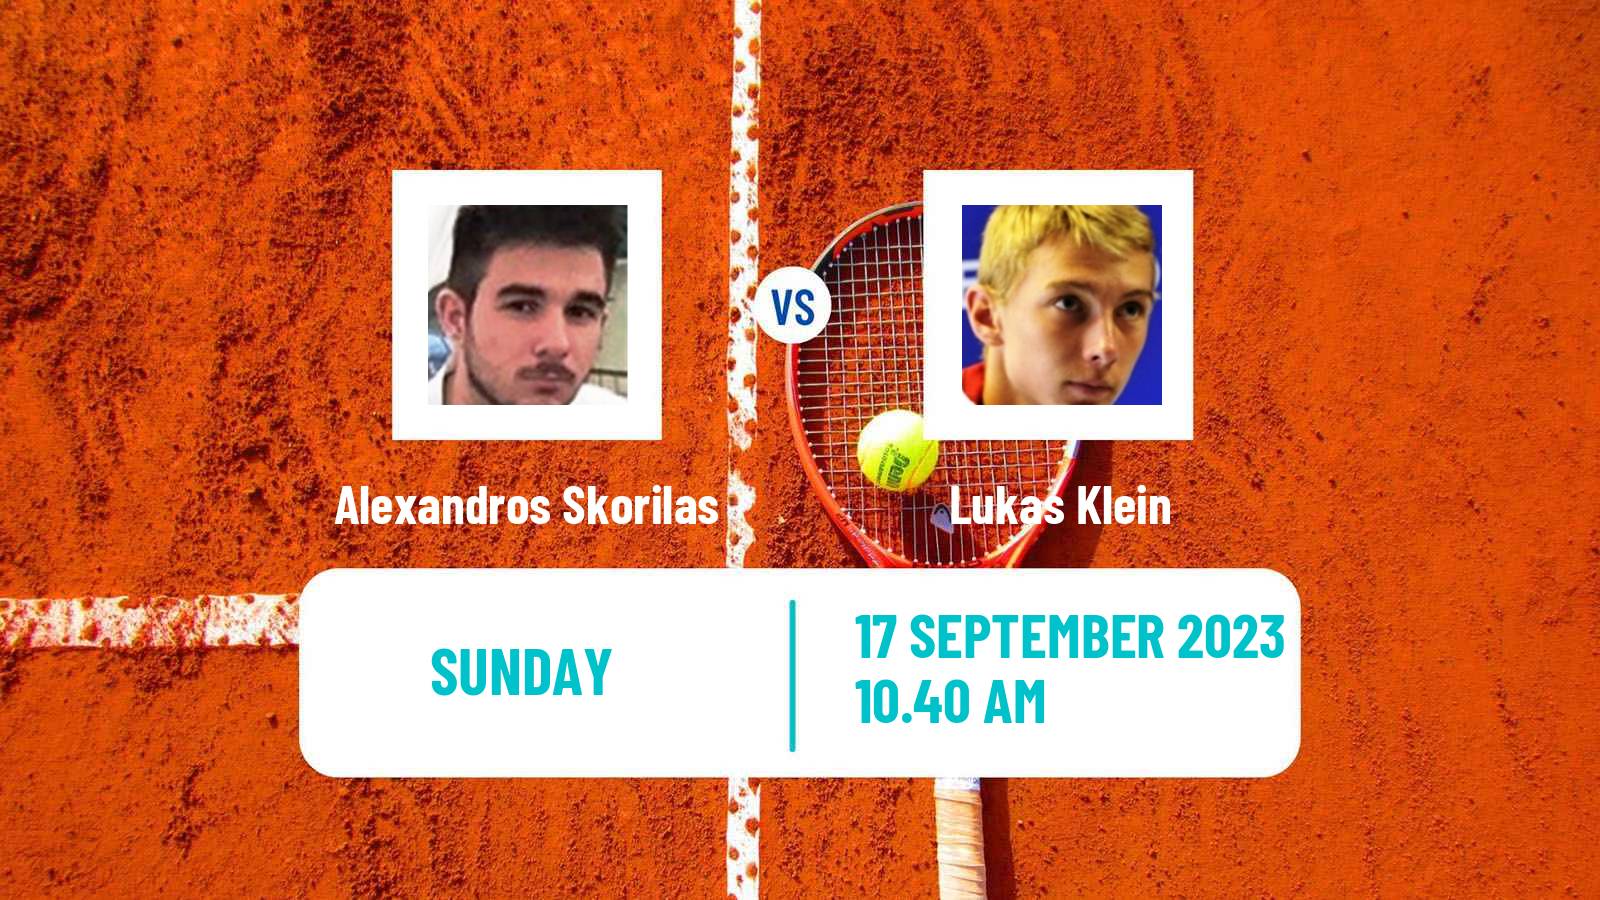 Tennis Davis Cup World Group I Alexandros Skorilas - Lukas Klein